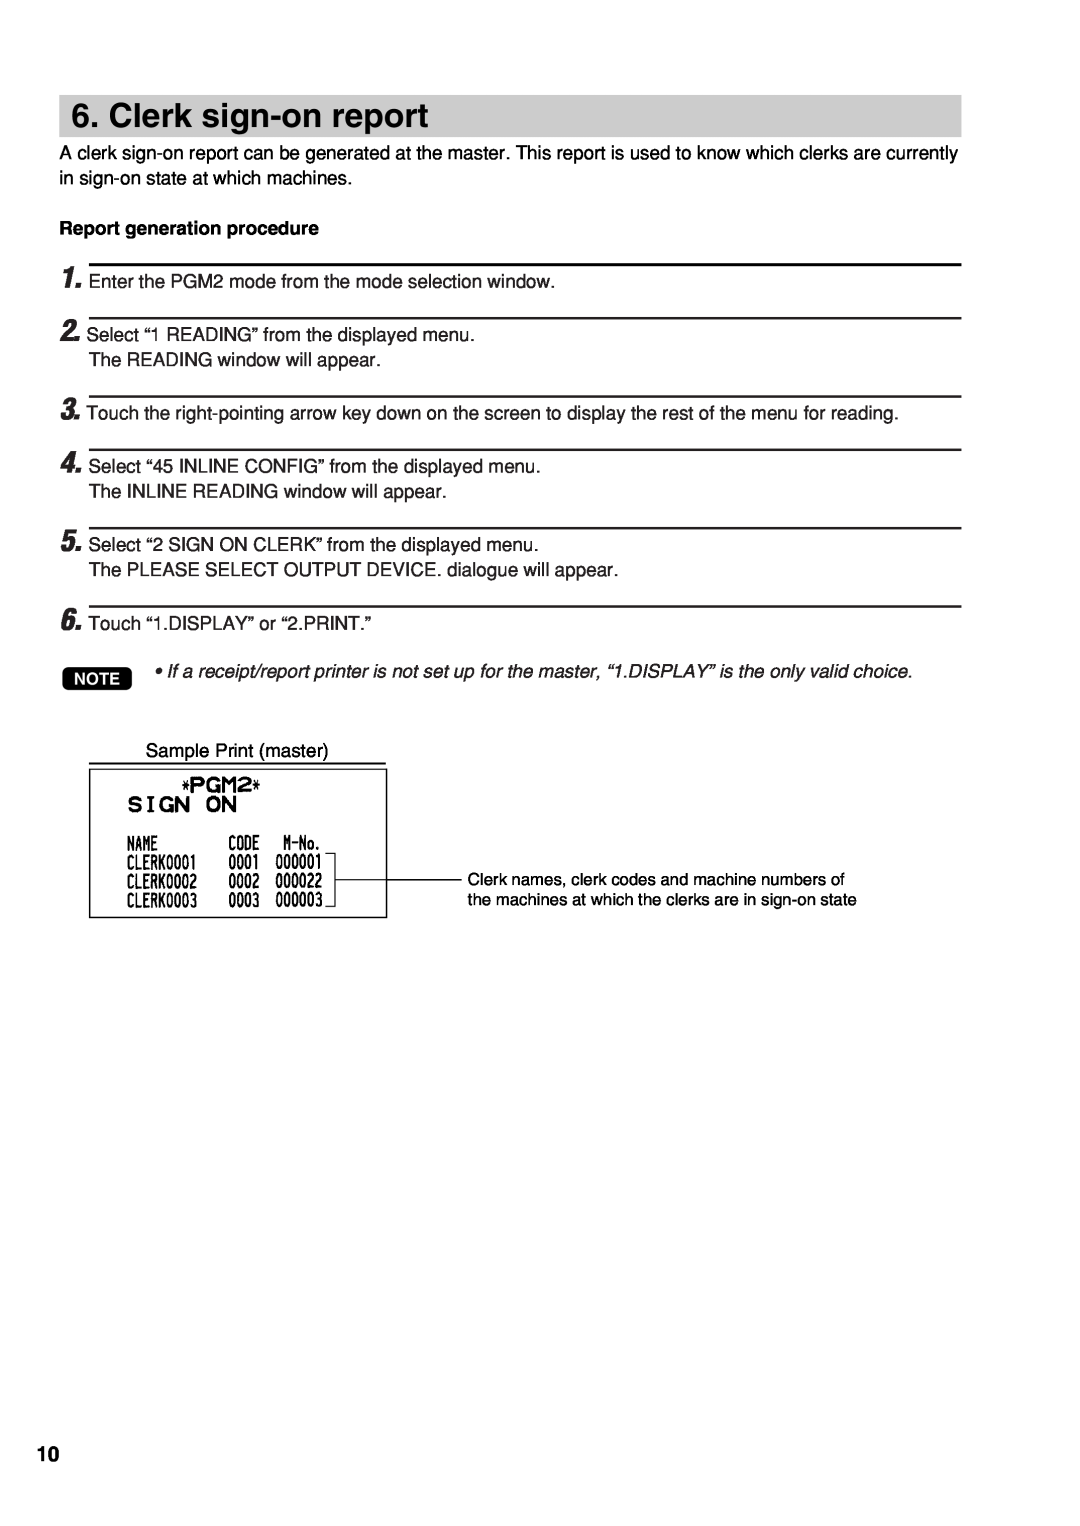 Sharp UP-3500 instruction manual Clerk sign-onreport, Report generation procedure, Sample Print master 